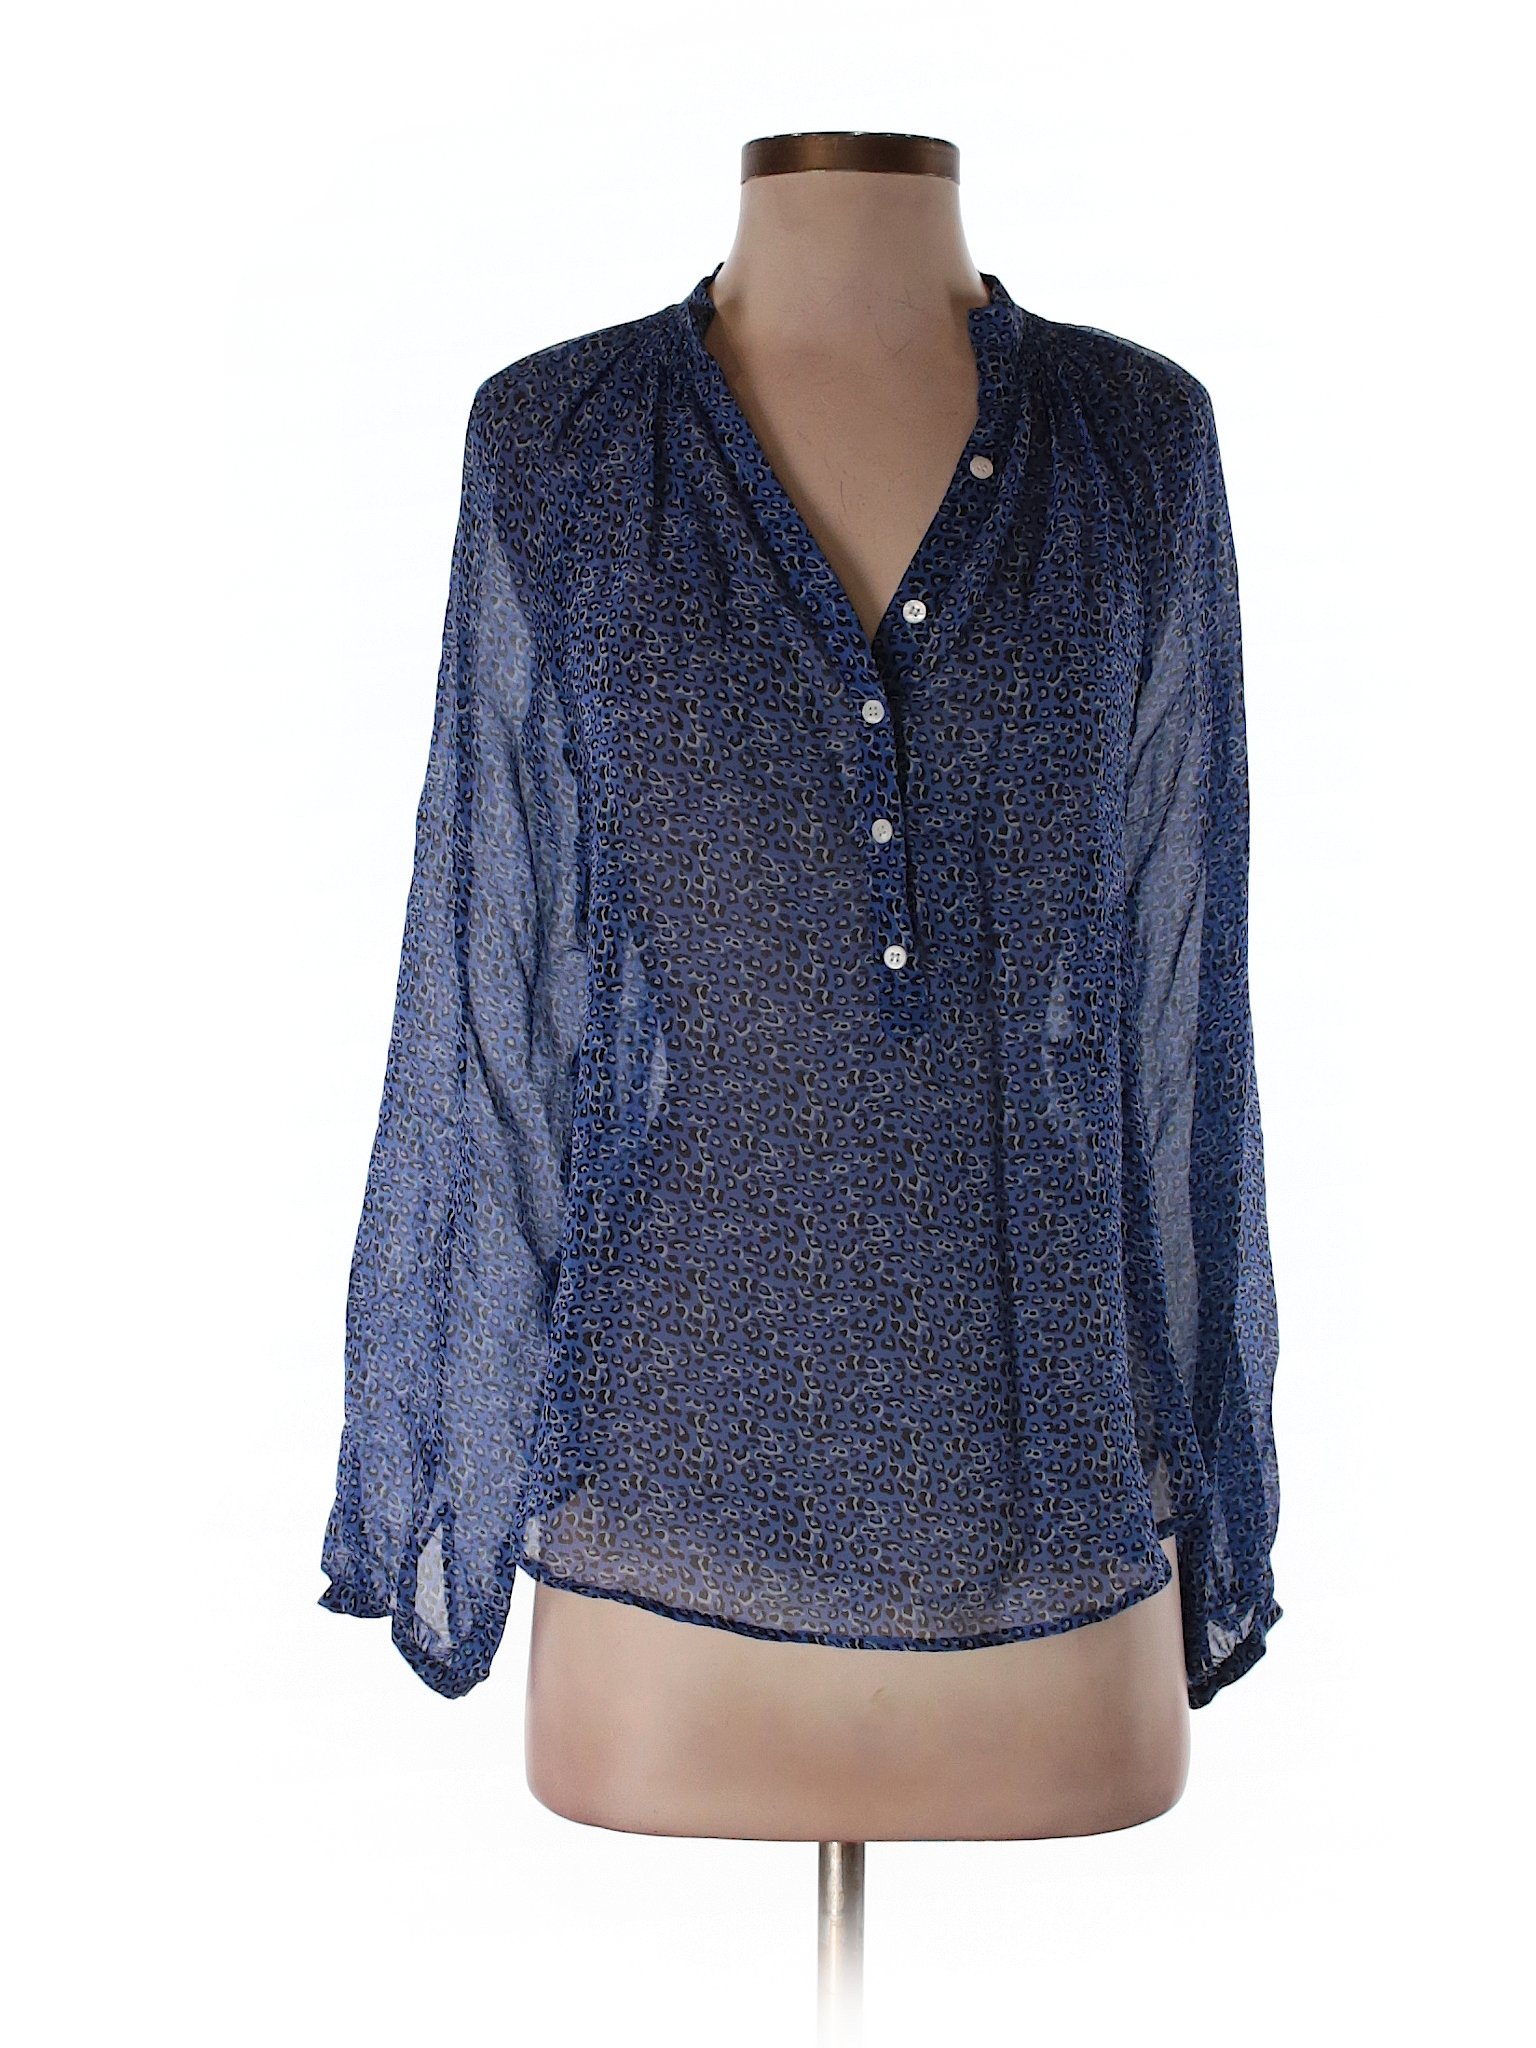 Yumi Kim 100% Silk Print Dark Blue Long Sleeve Silk Top Size XS - 97% ...